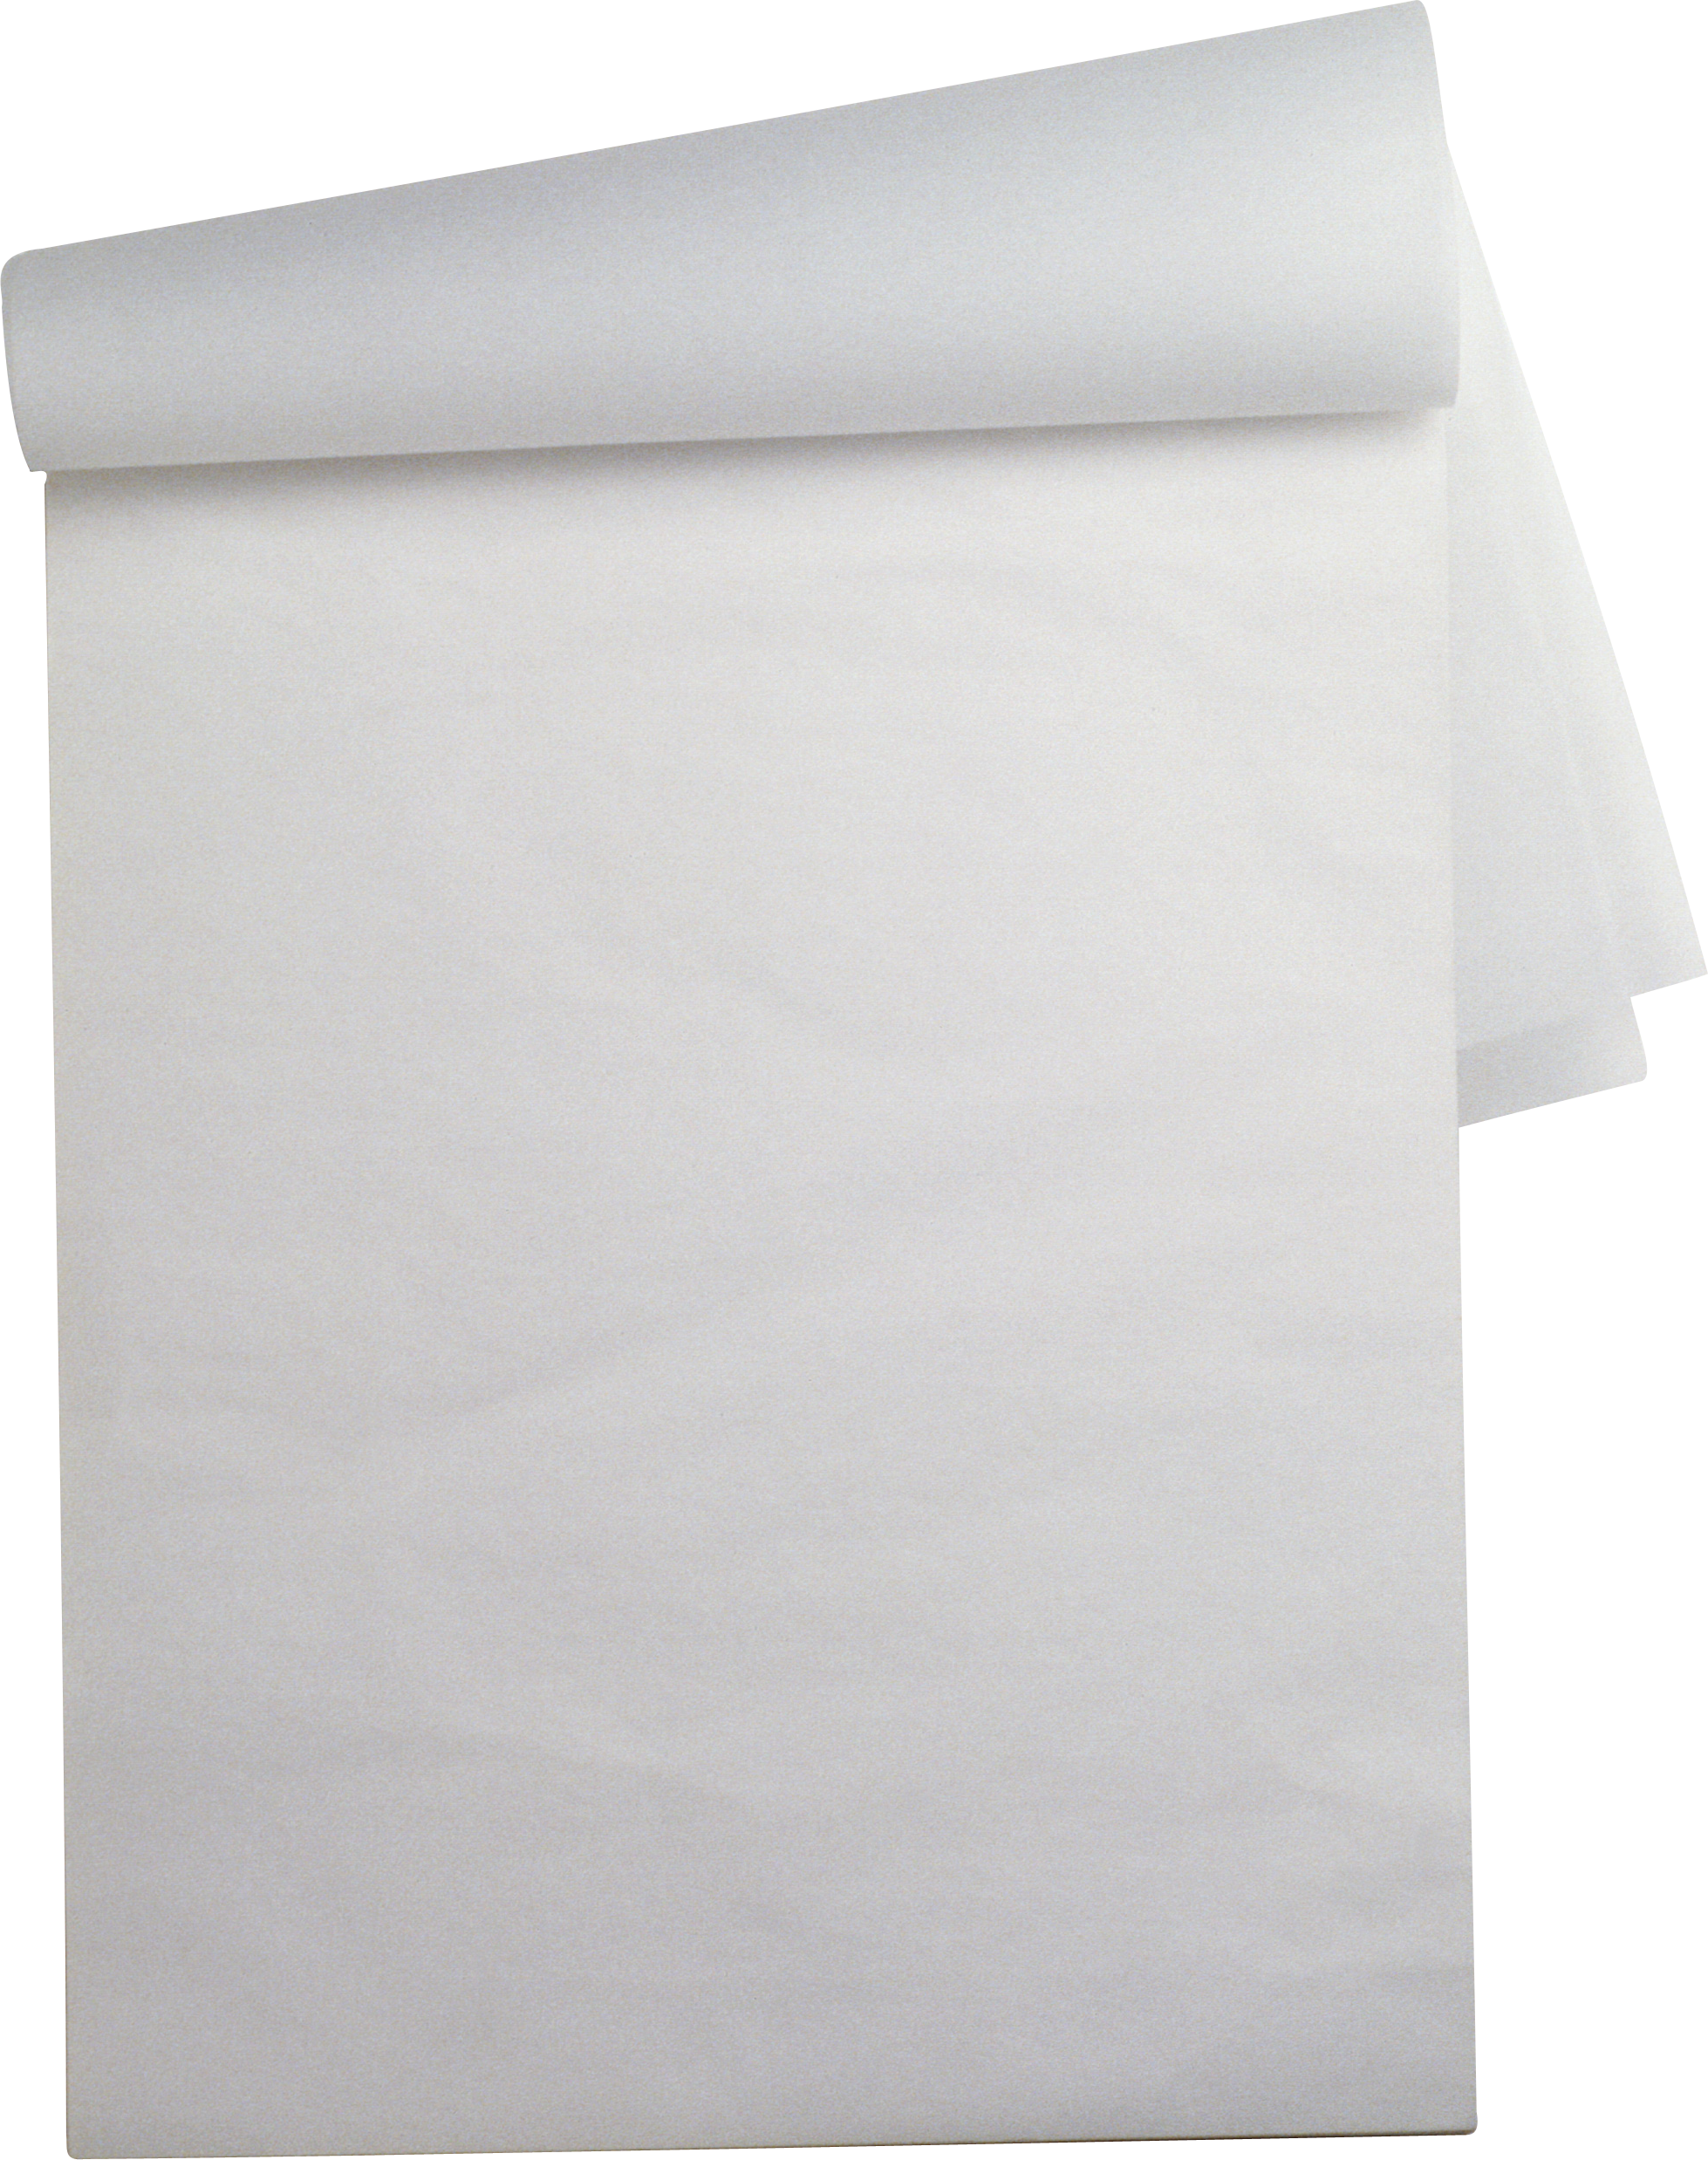 Paper sheet PNG images Download 